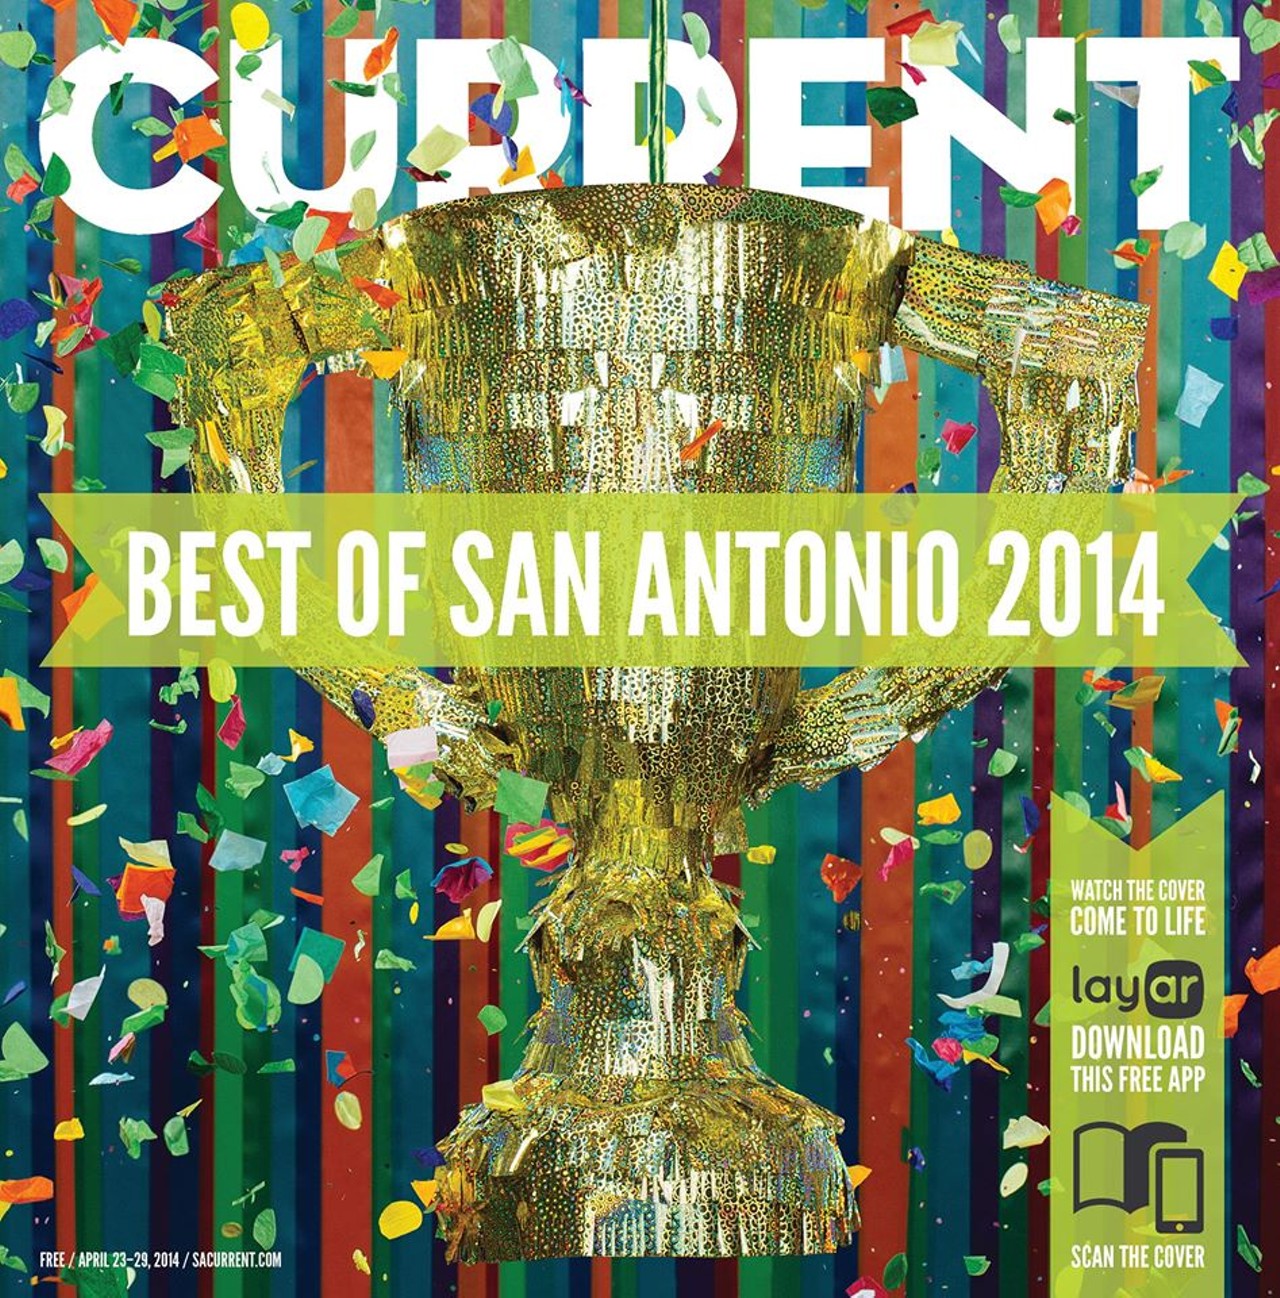 [Related: Best of San Antonio 2014]